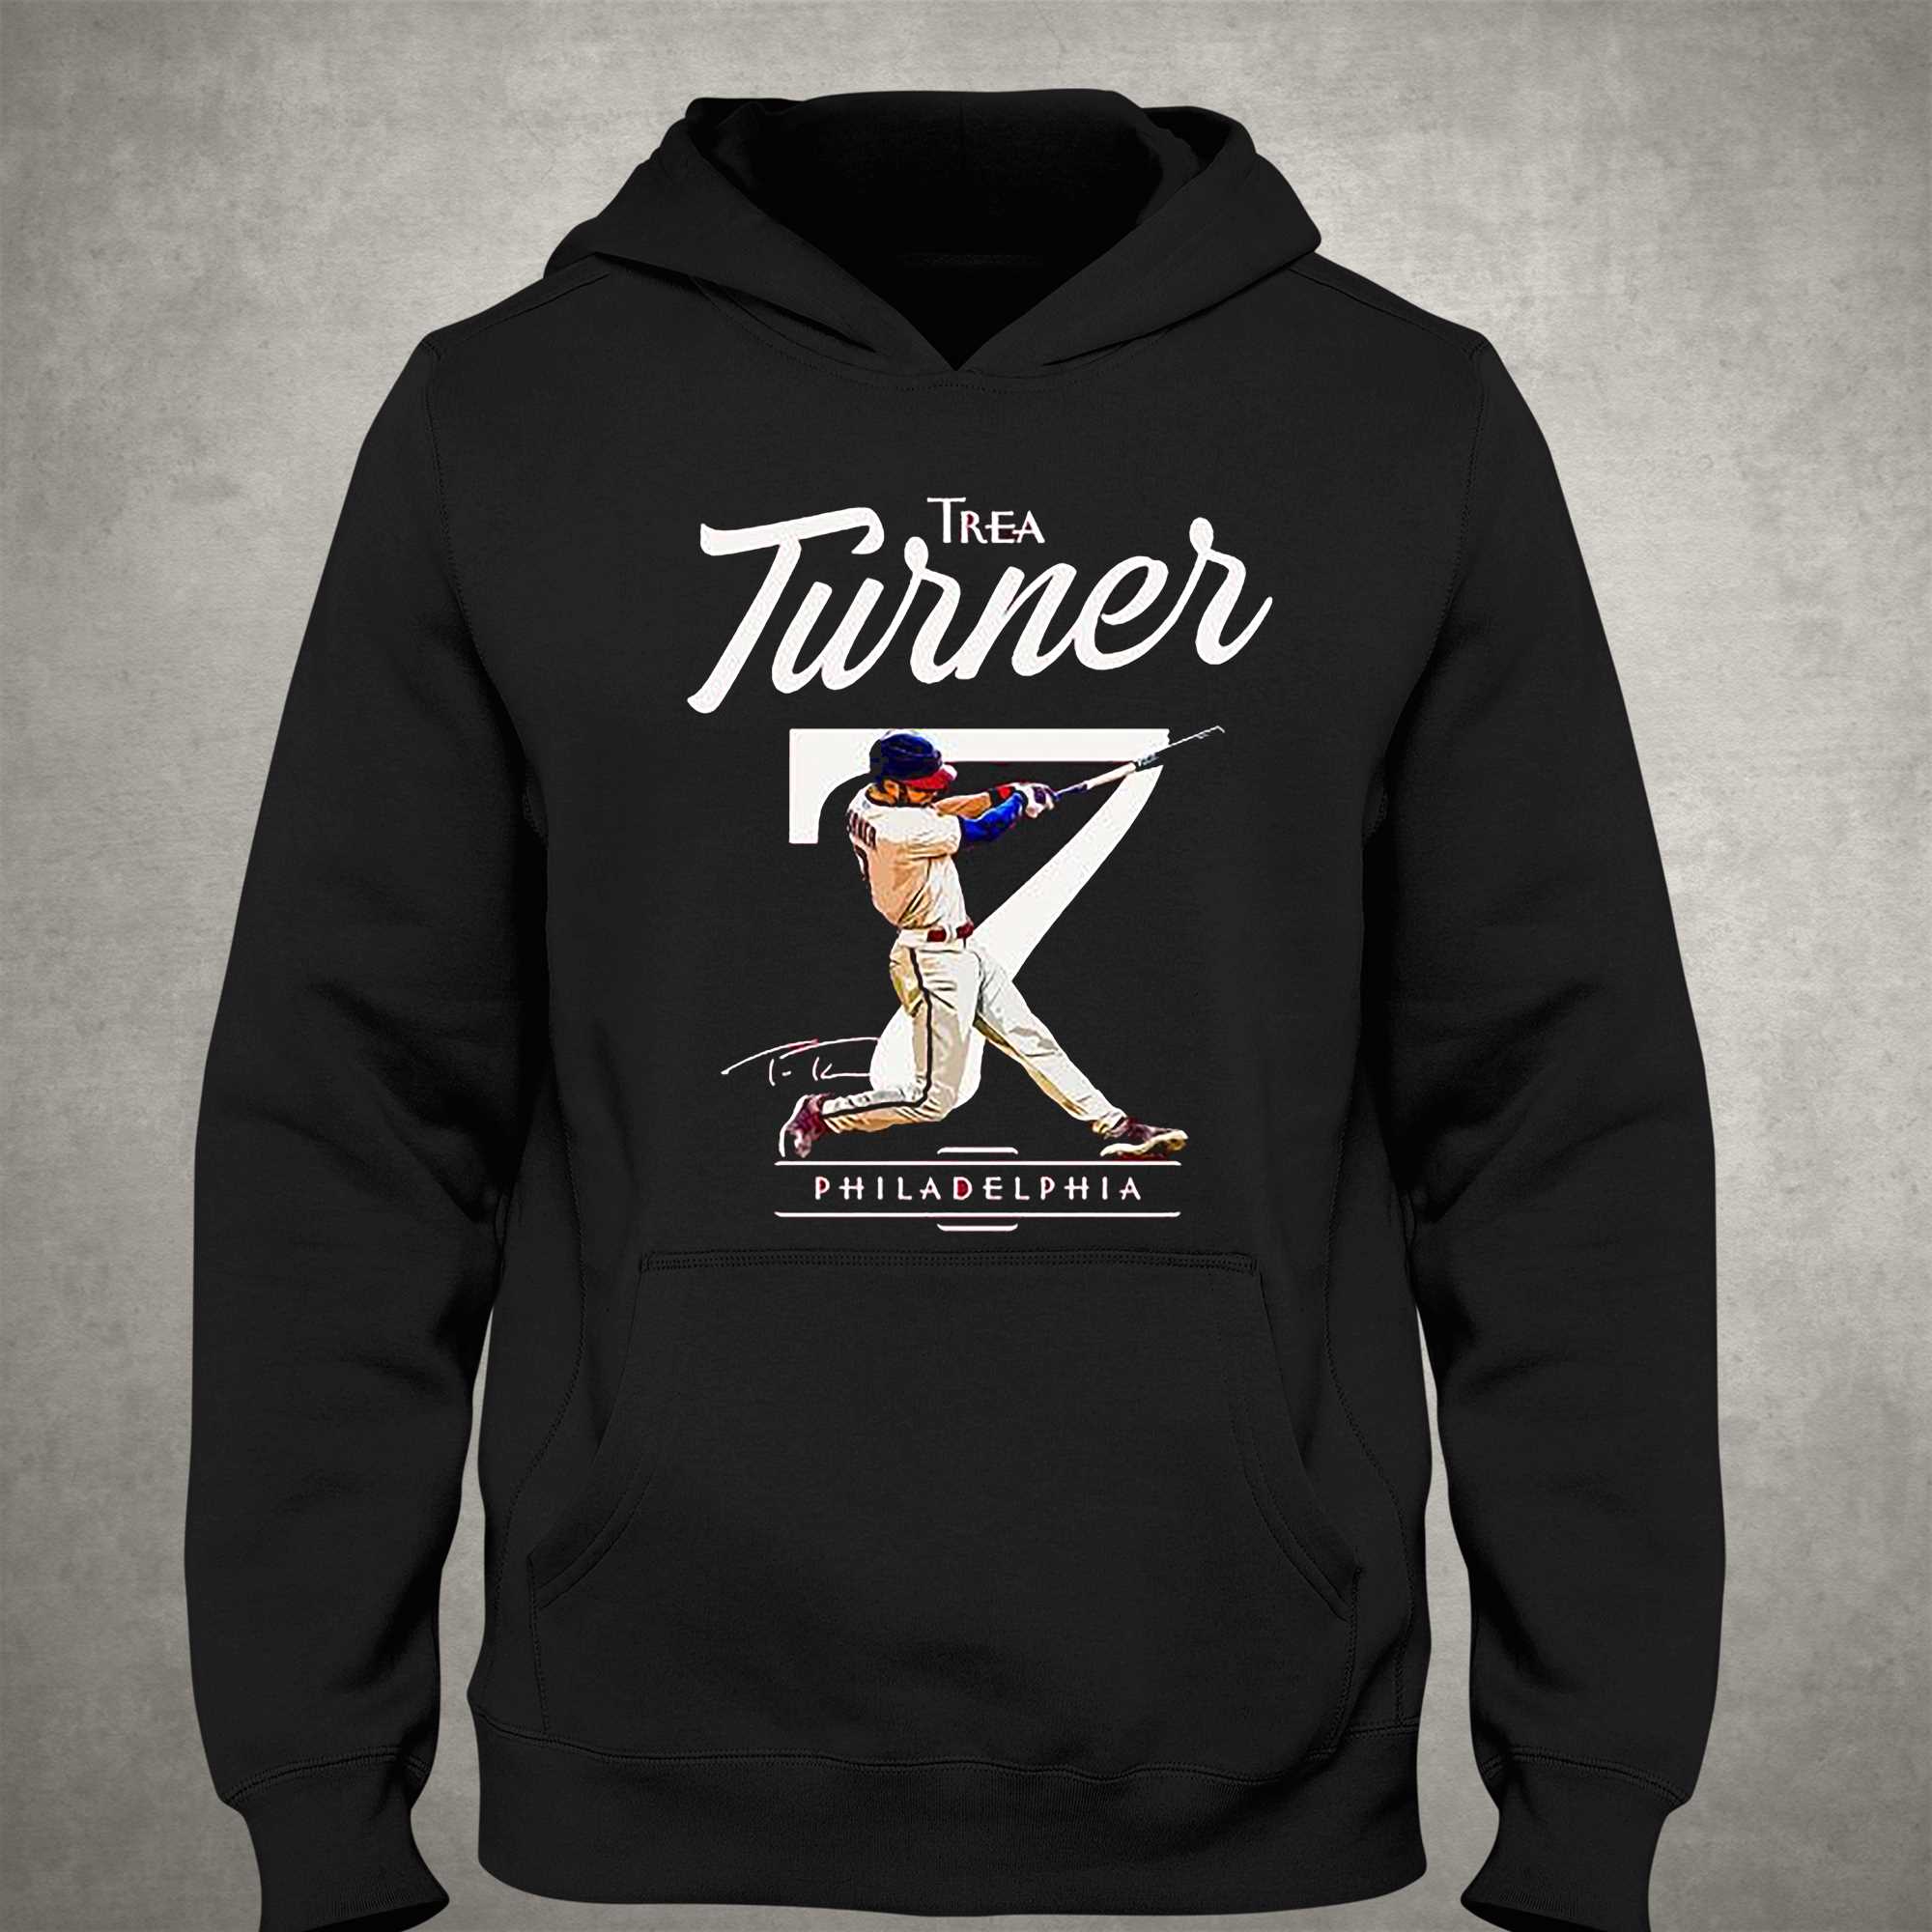 Trea-turner-swinging-philadelphia-phillies-signature-shirt-t-shirt